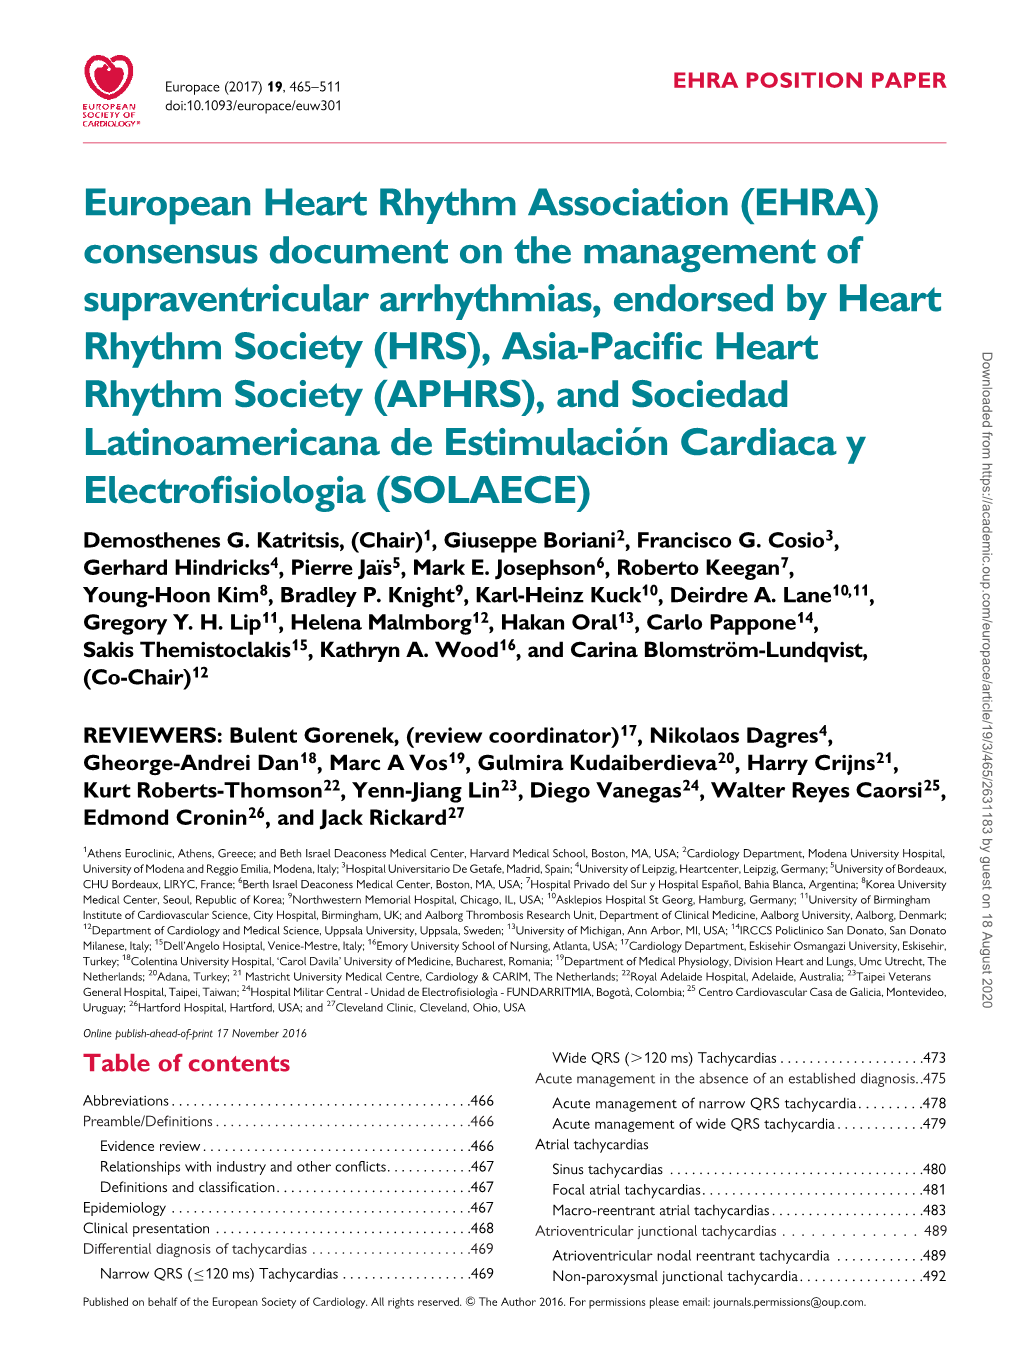 European Heart Rhythm Association (EHRA) Consensus Document on the Management of Supraventricular Arrhythmias, Endorsed by Heart